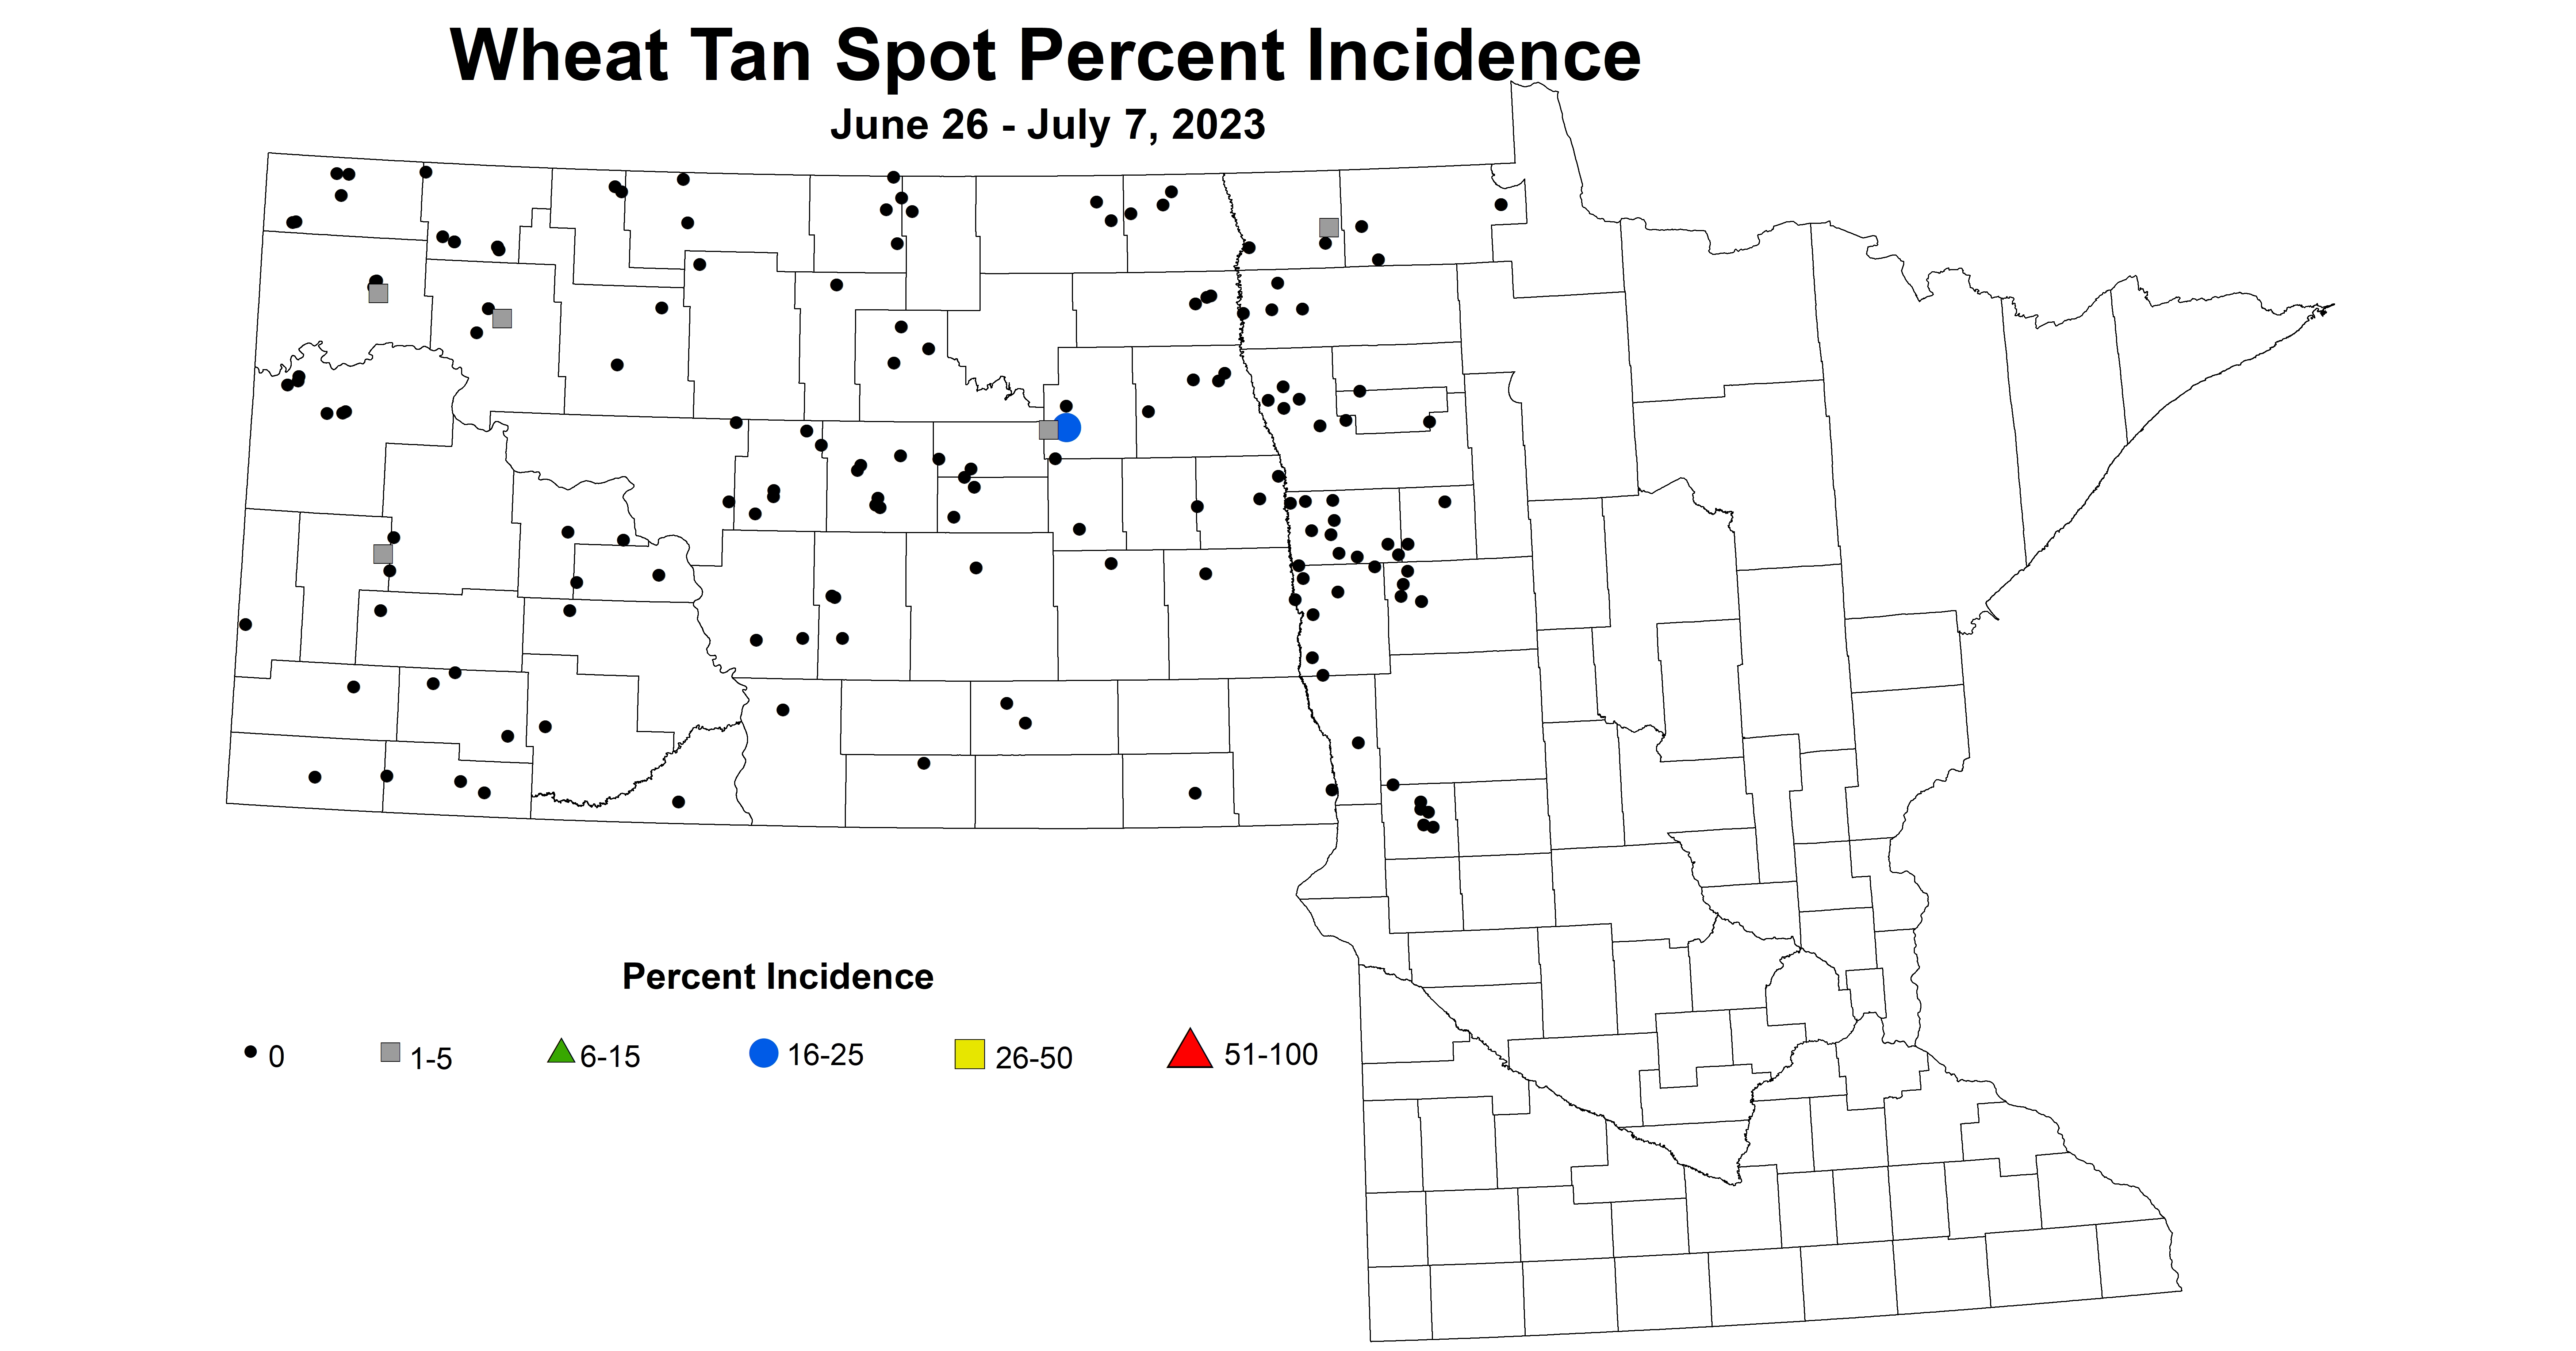 wheat tan spot incidence June 26 - July 7 2023